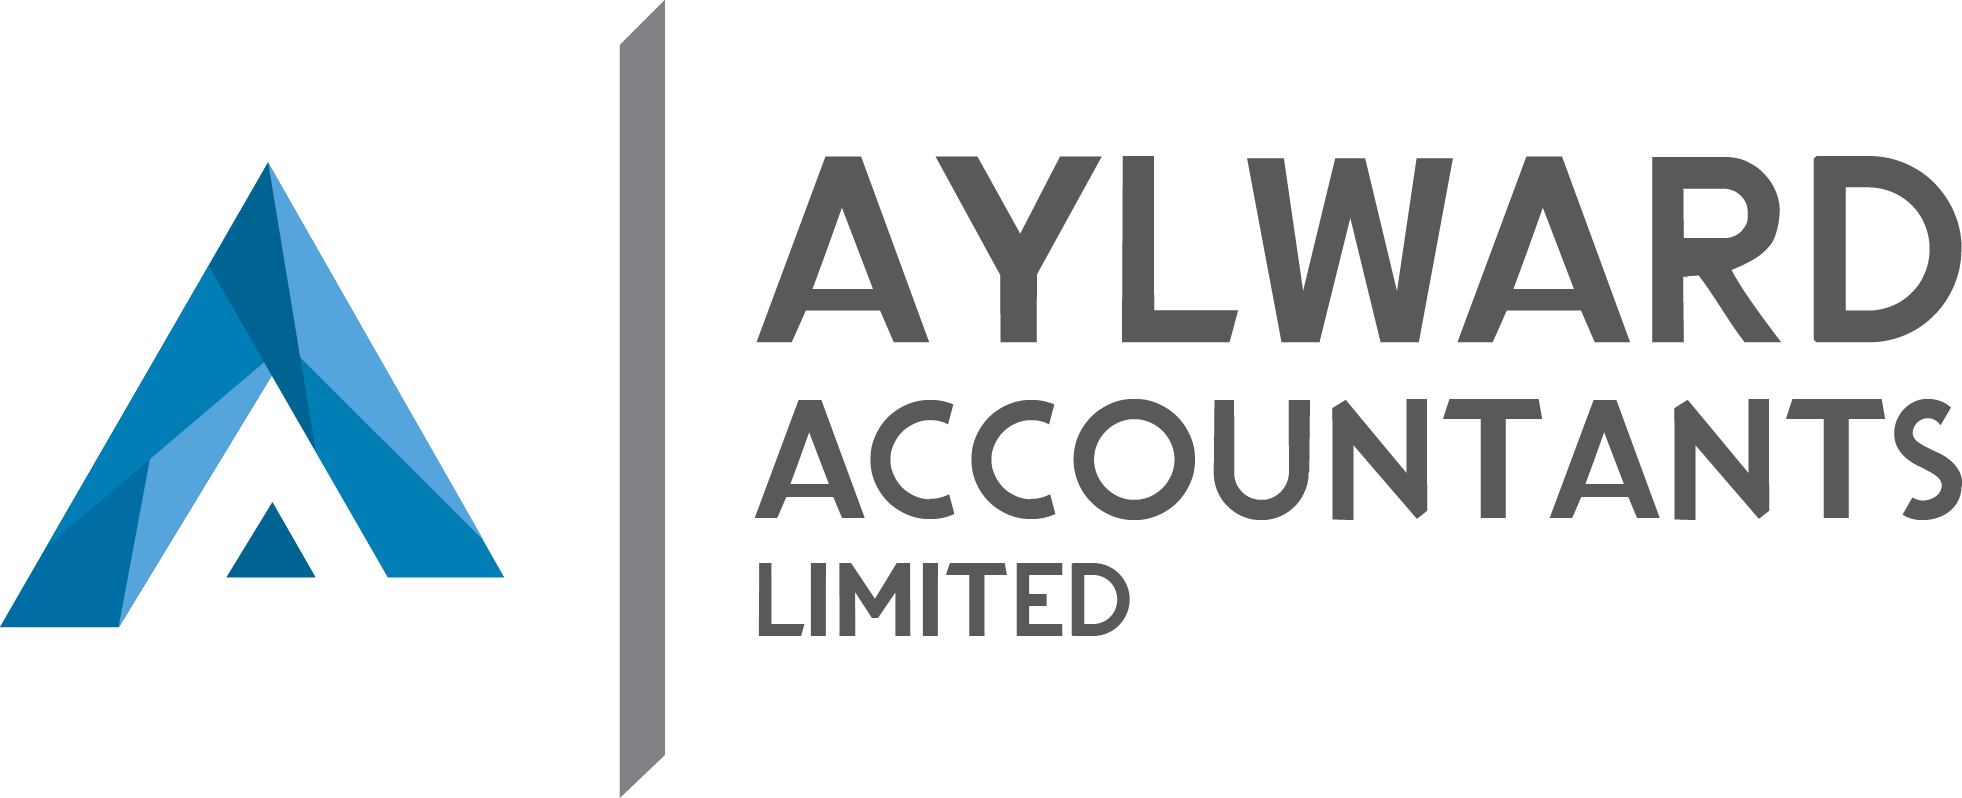 Aylward Accountants Ltd